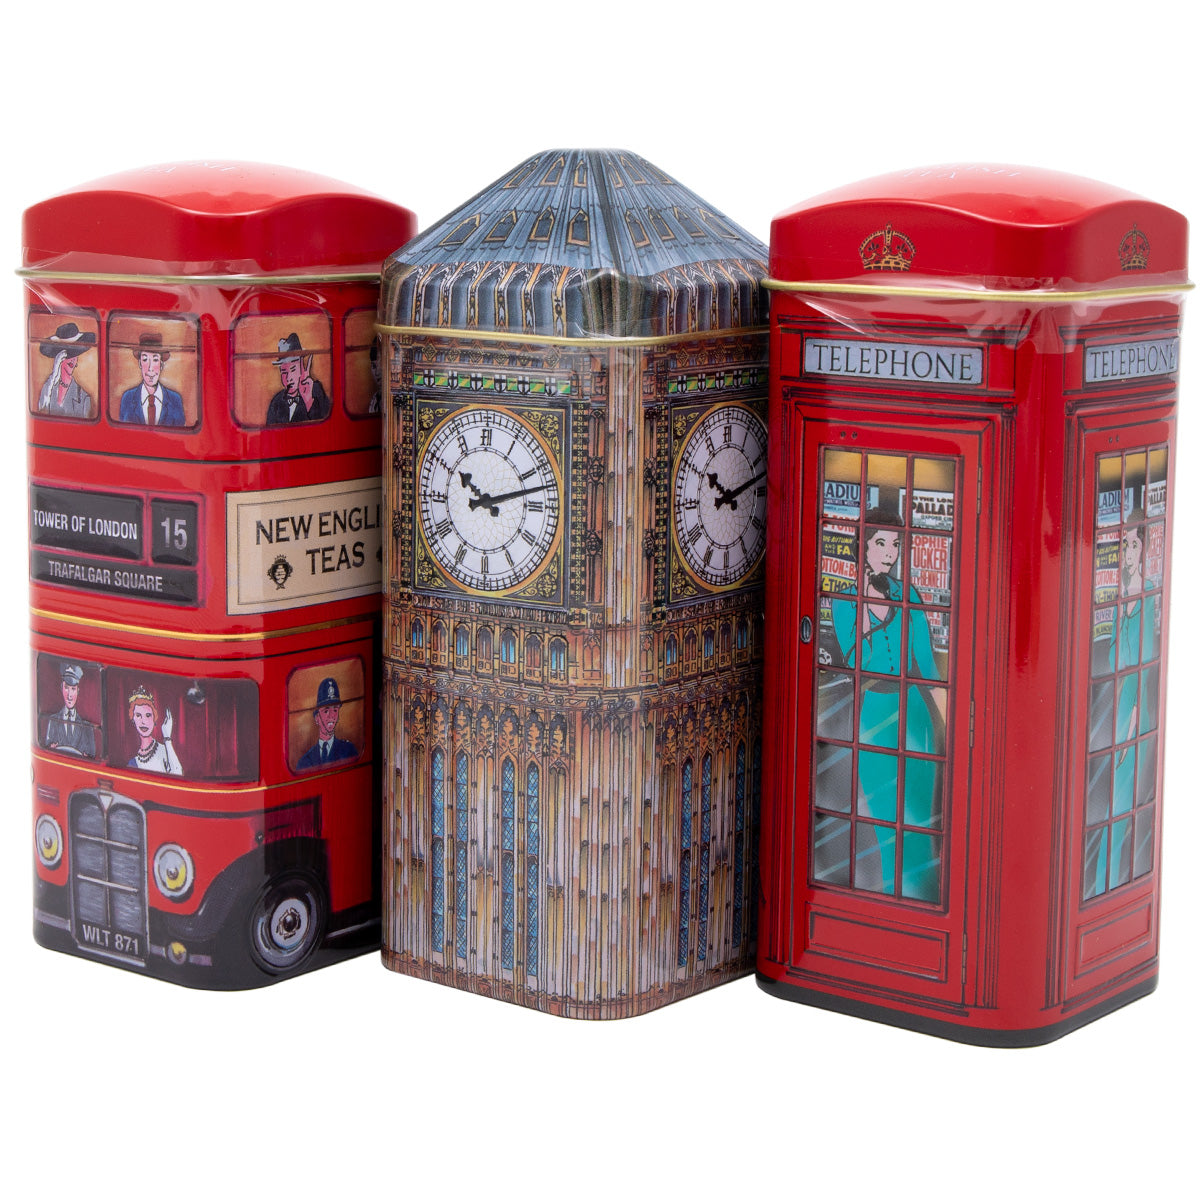 Traditional English Teas - Bus / Big Ben / Telephone - Teabags Gift Set 1